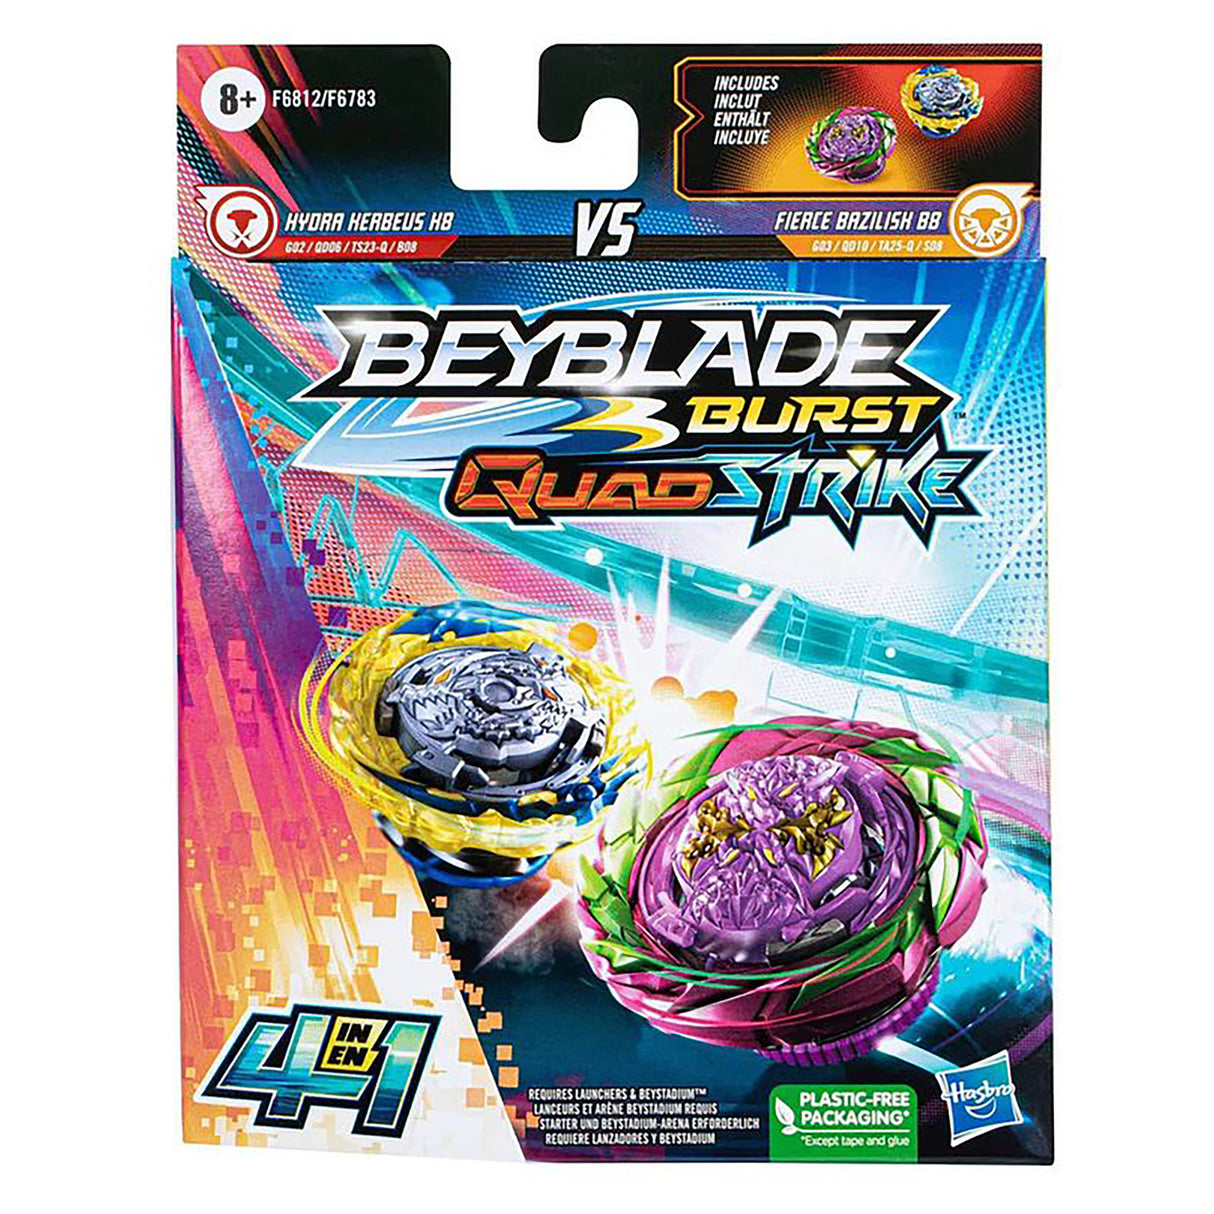 Beyblade Burst QuadStrike Fierce Bazilisk B8 and Hydra Kerbeus K8 Dual Pack